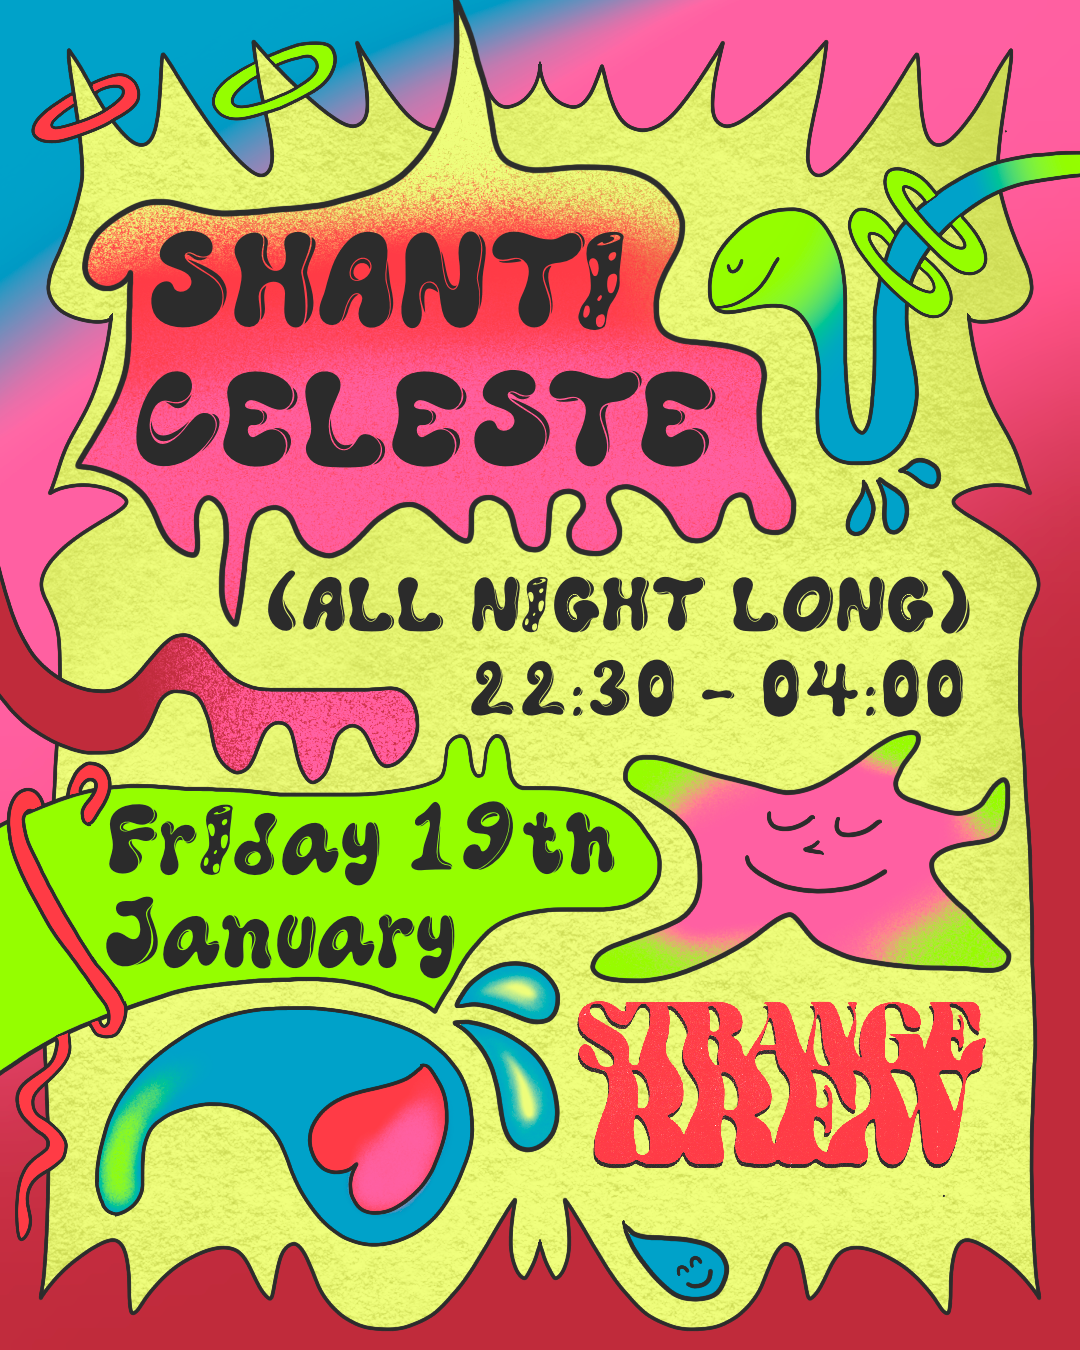 Peach Party with Shanti Celeste & Golesworthy at The Carpet Shop, London